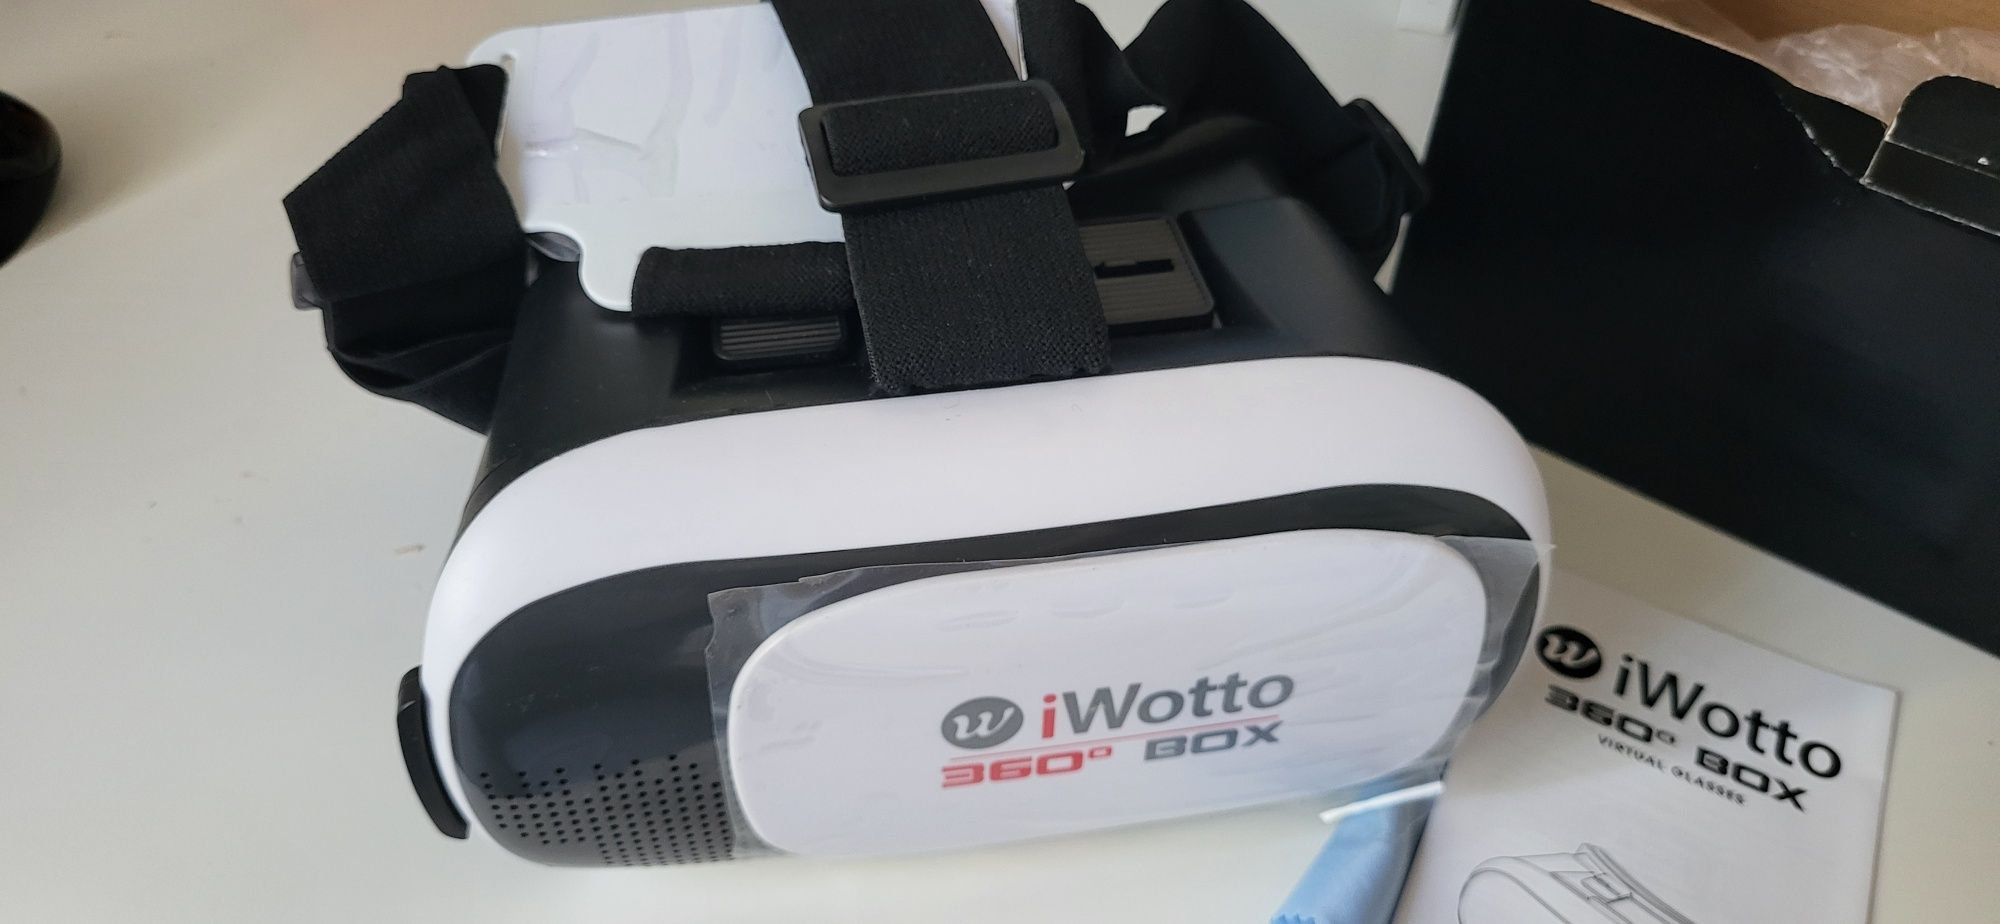 Oculos Realidade Virtual WIWotto 360° box